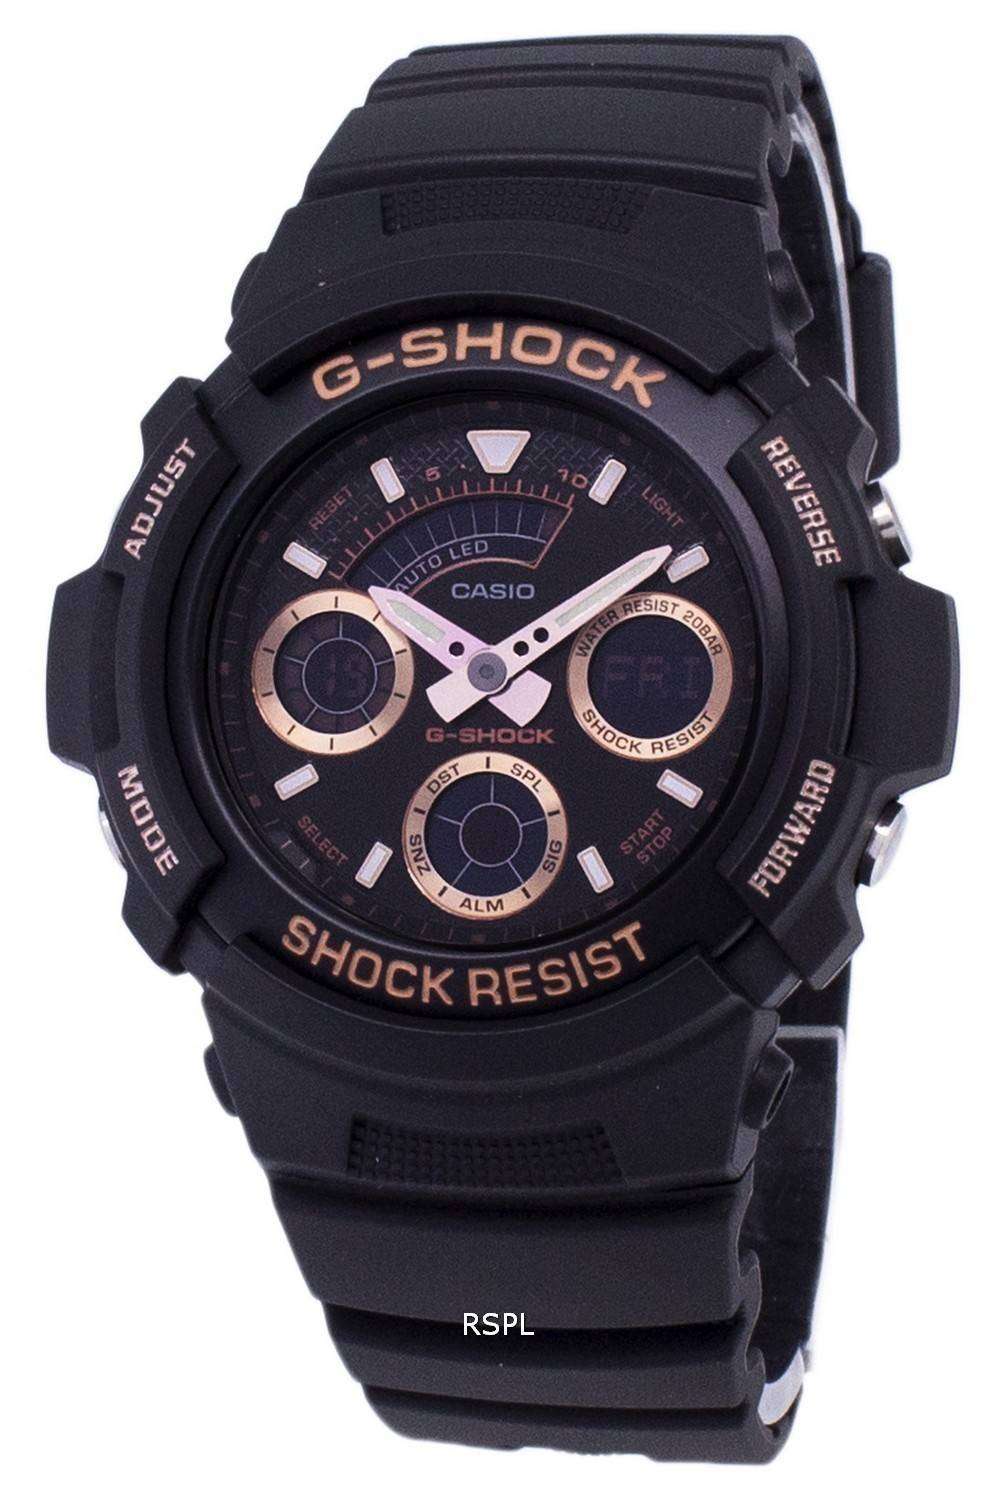 Casio G-Shock Shock Resistant 200M Analog Digital AW-591GBX-1A4